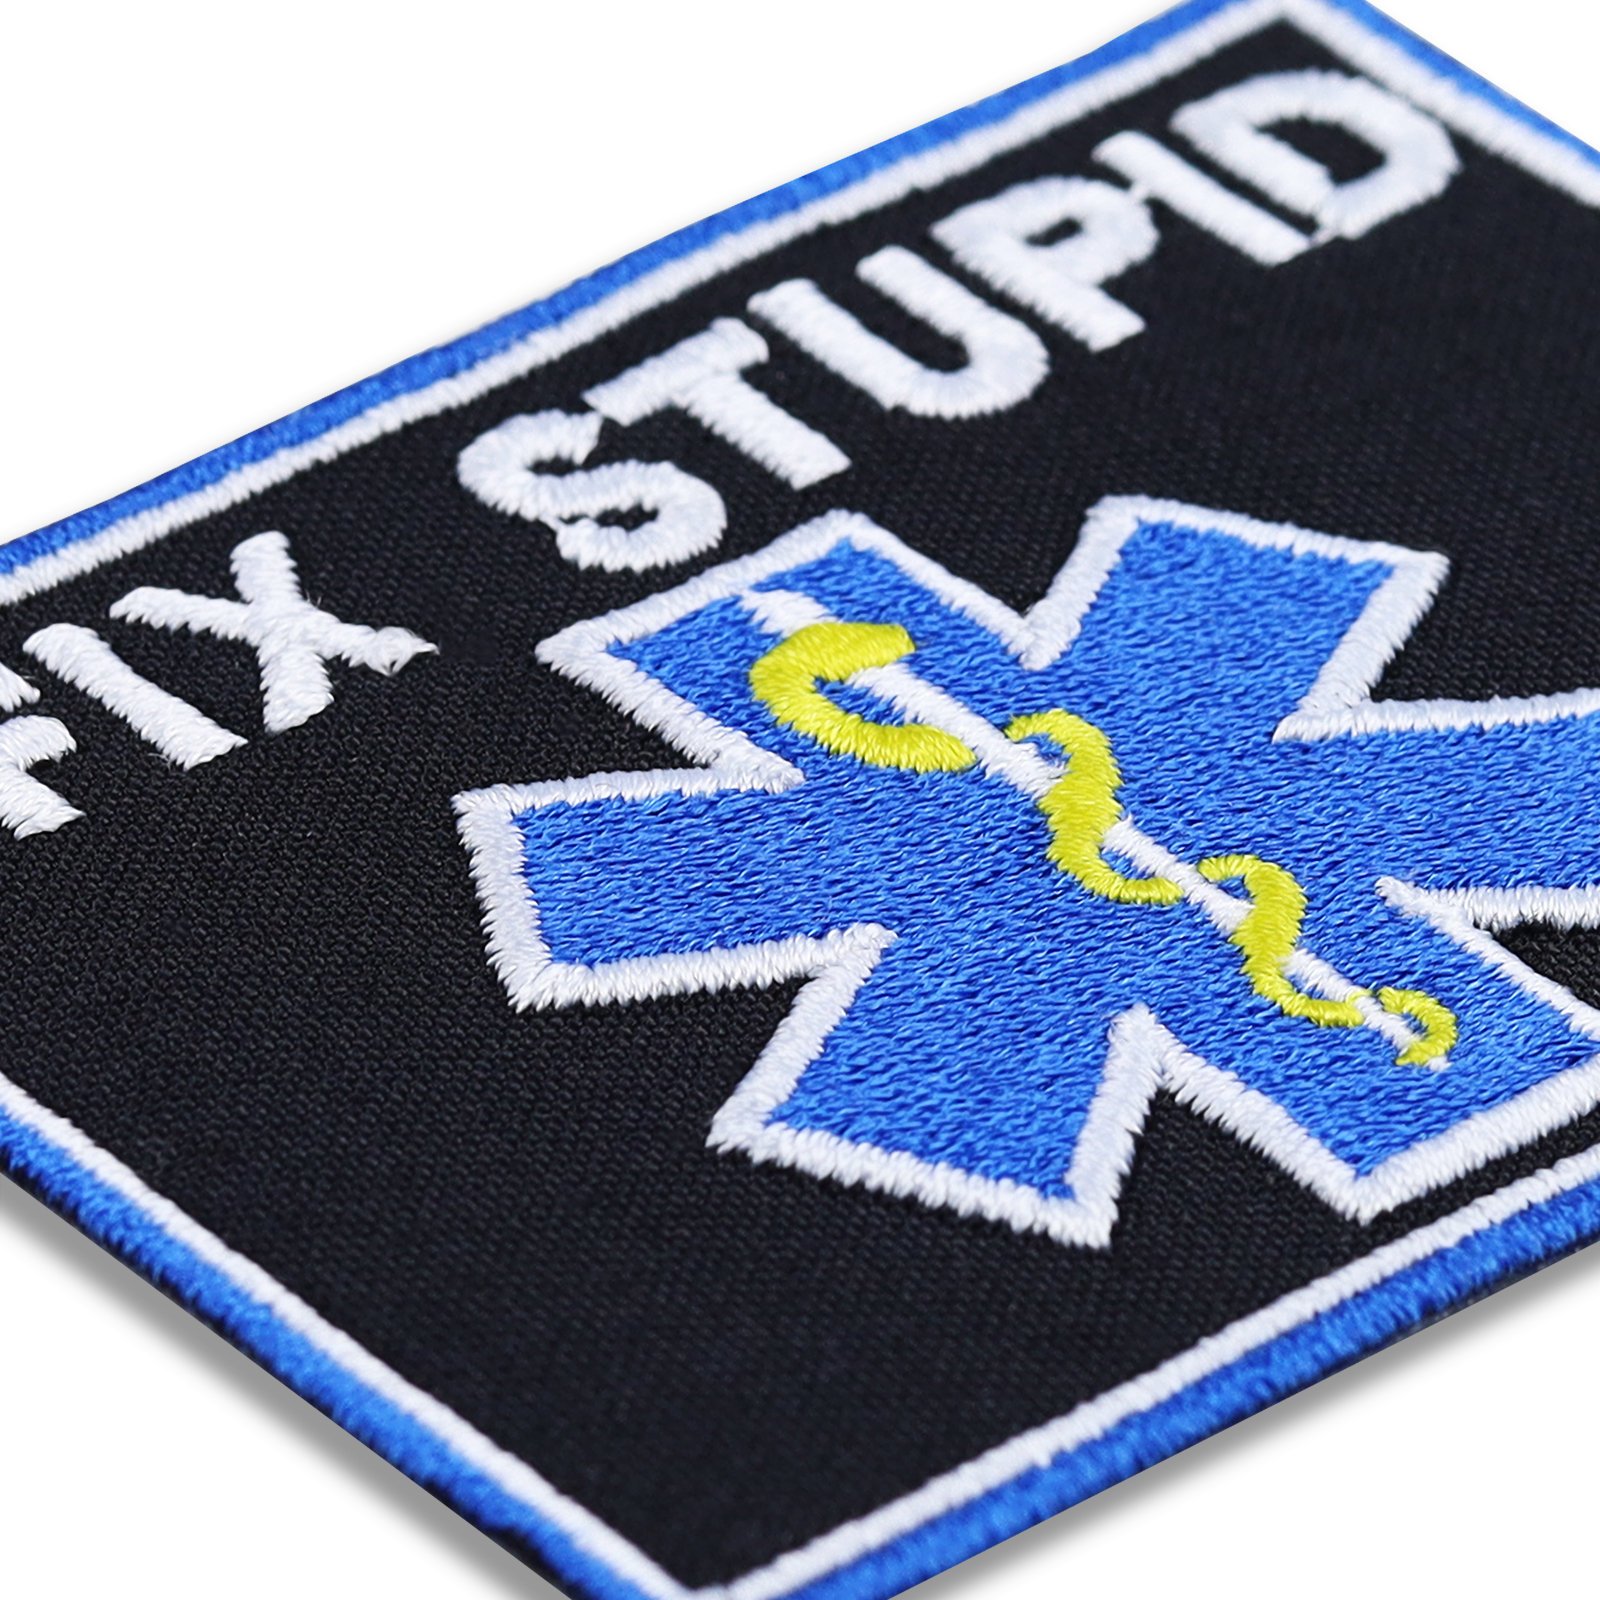 I fix stupid - Patch